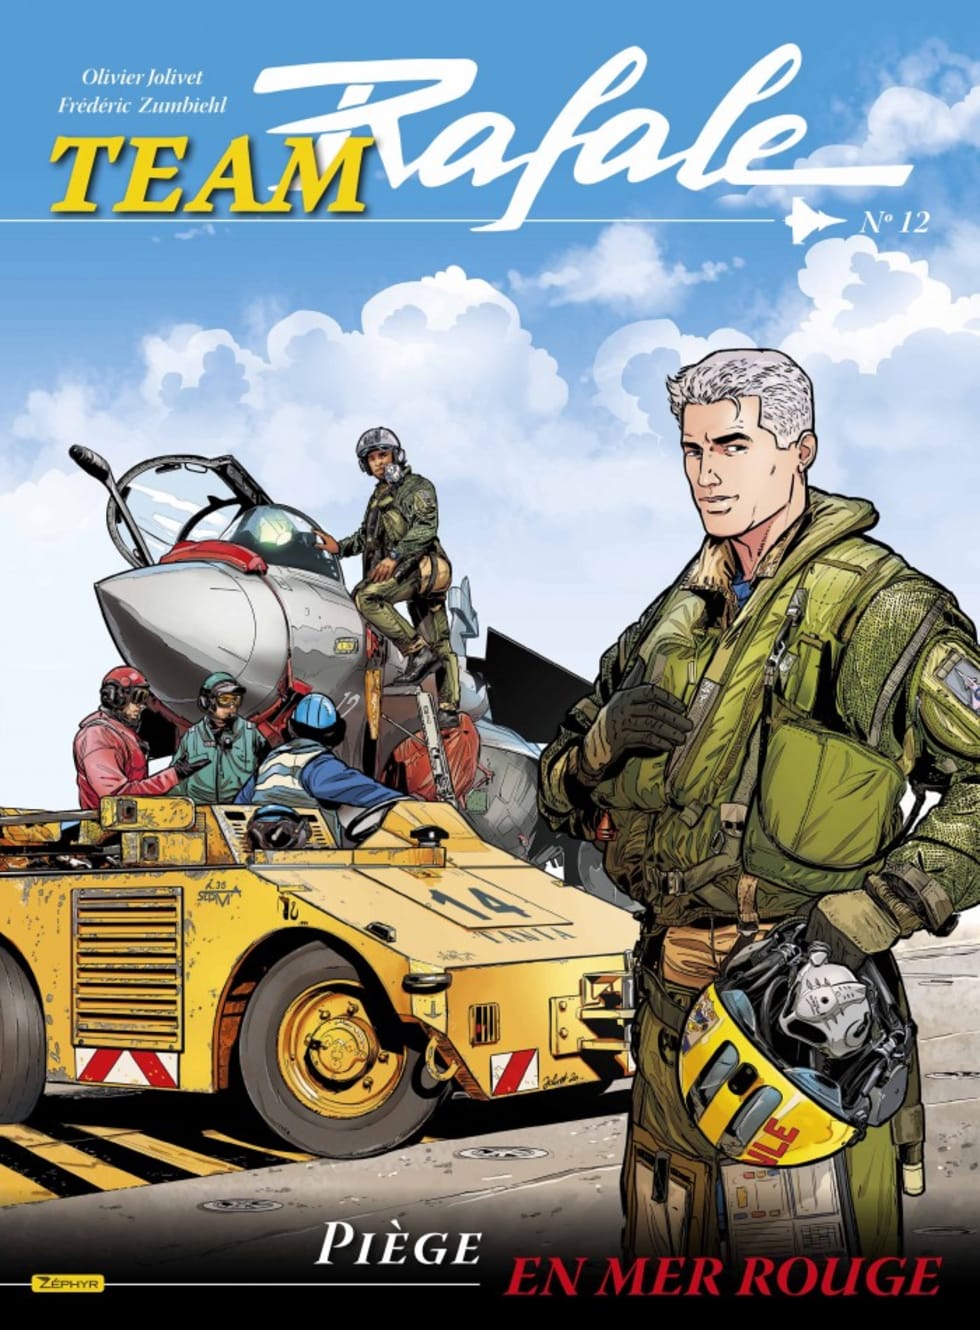 Comic Book: “Team Rafale, Volume 12 - Trap in the Red Sea*”